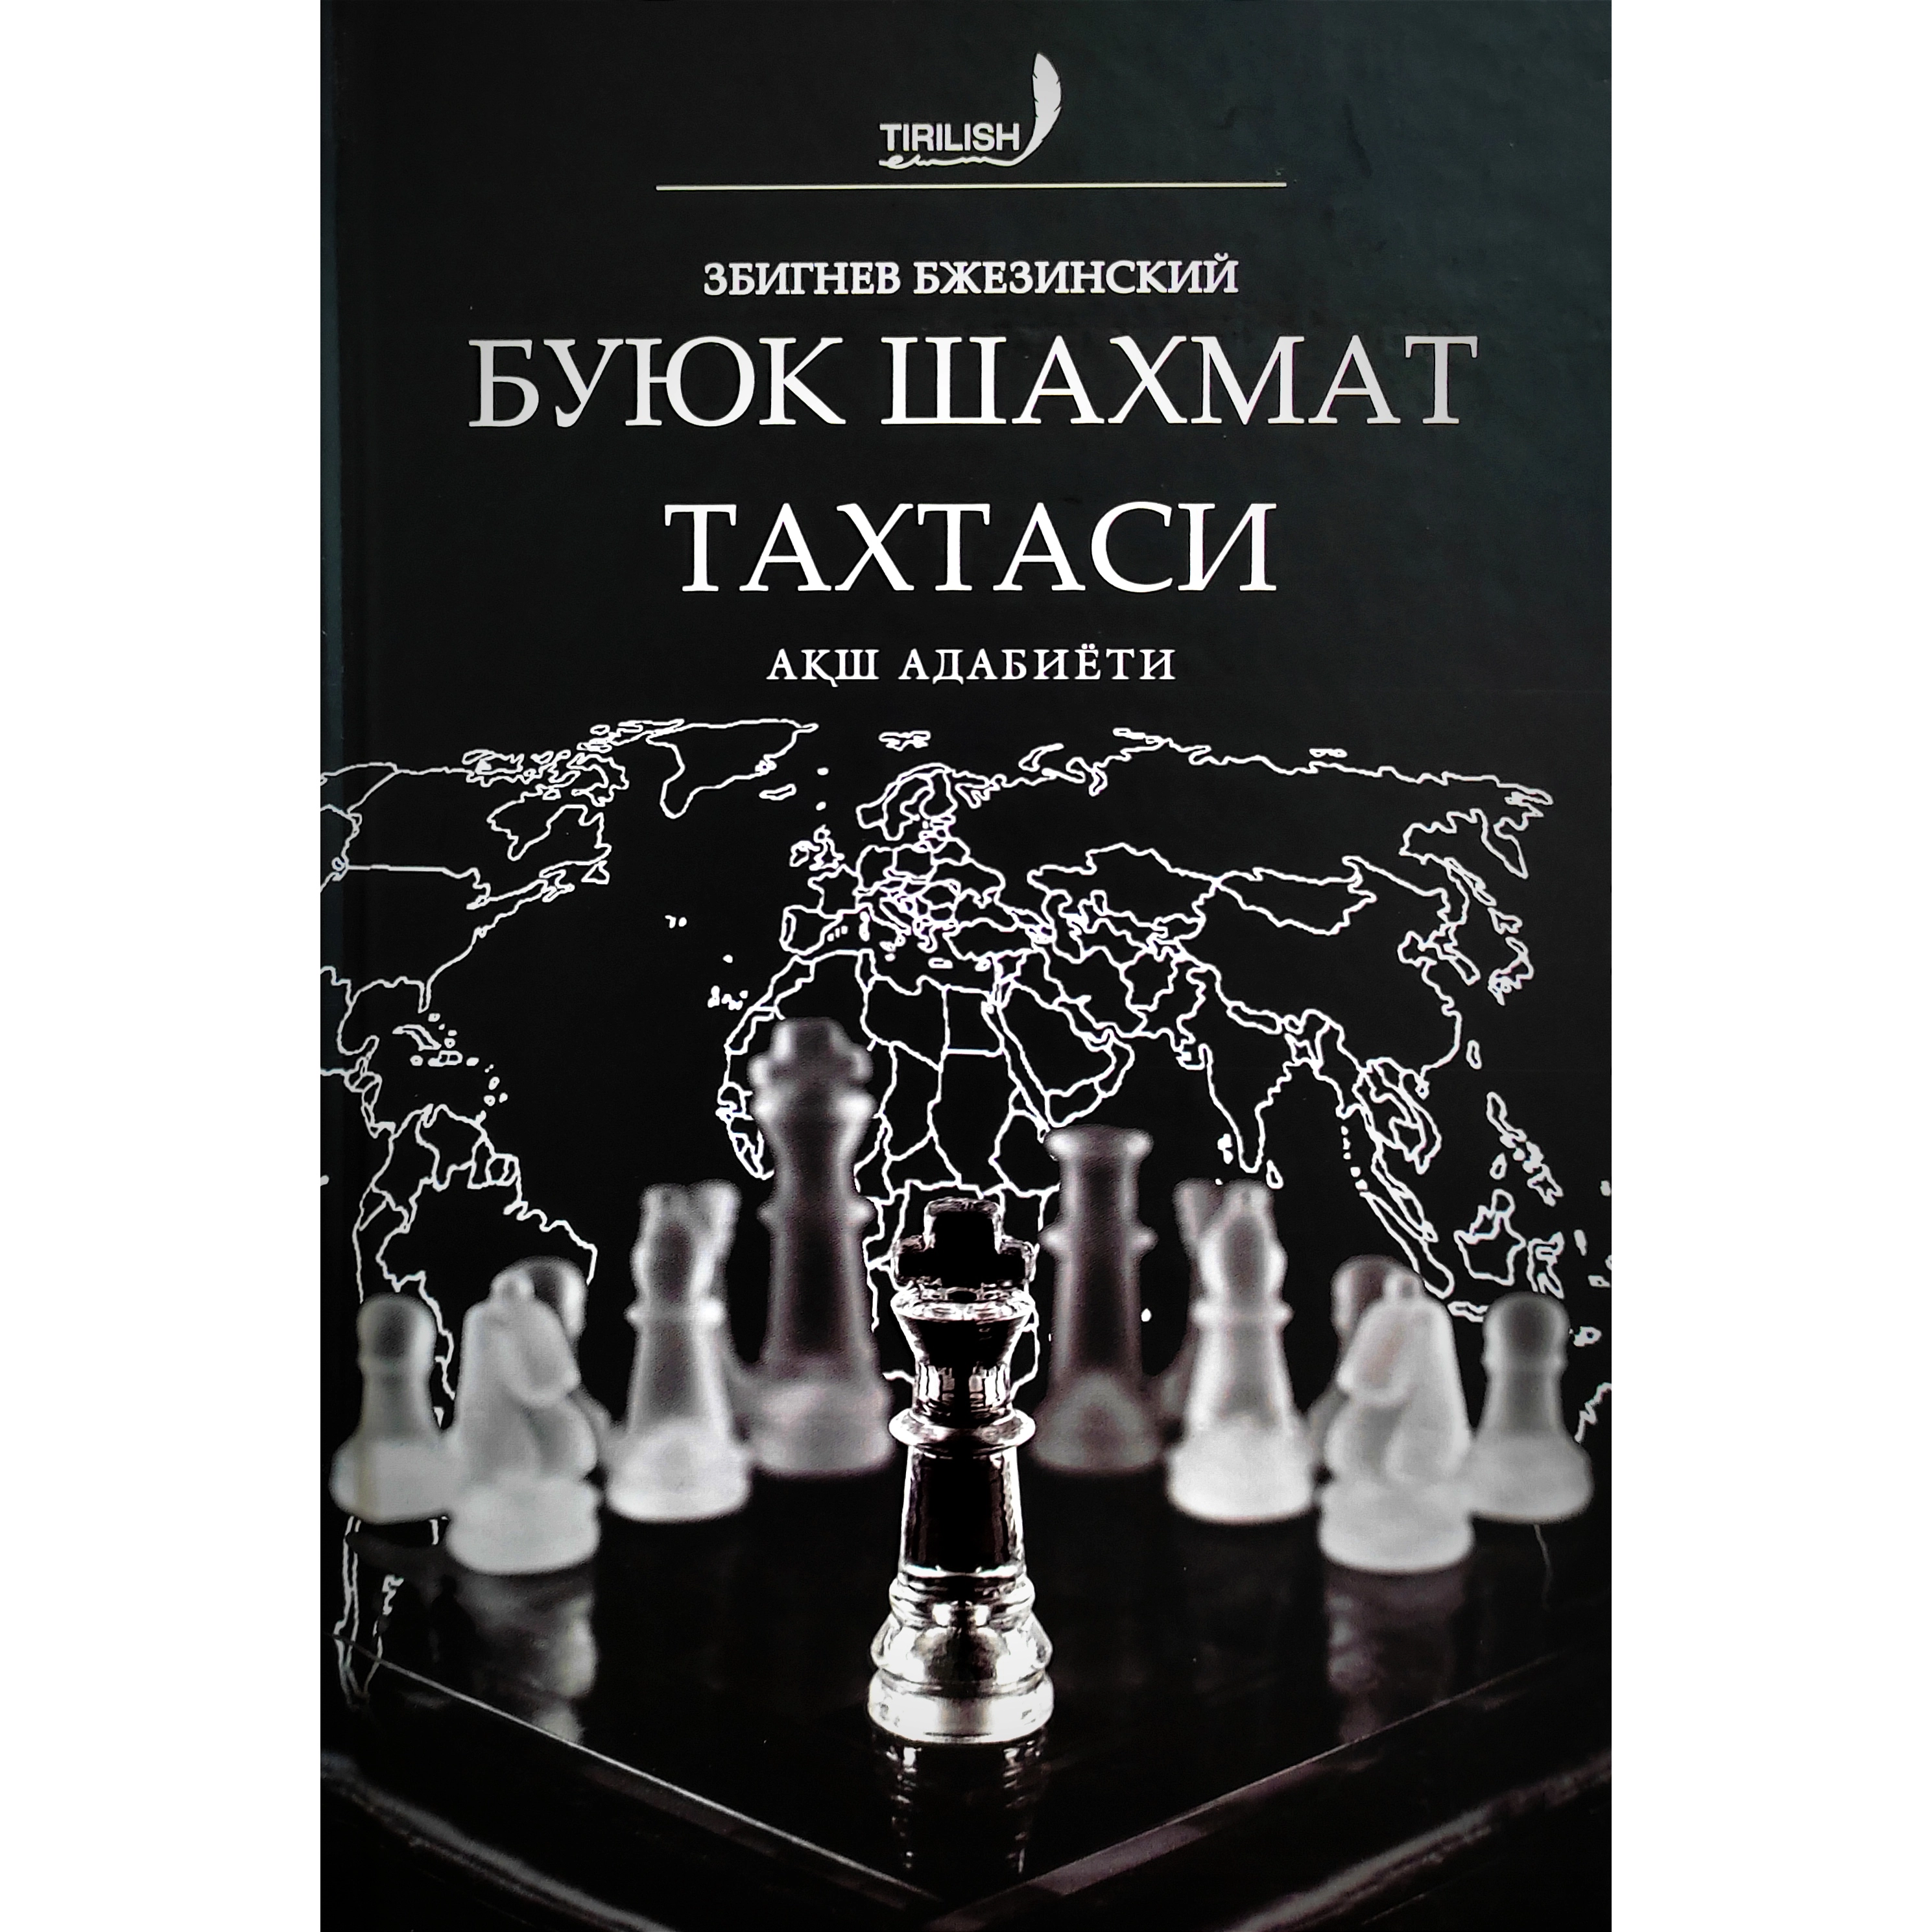 Збигнев Бжезинский: Буюк шахмат тахтаси купить